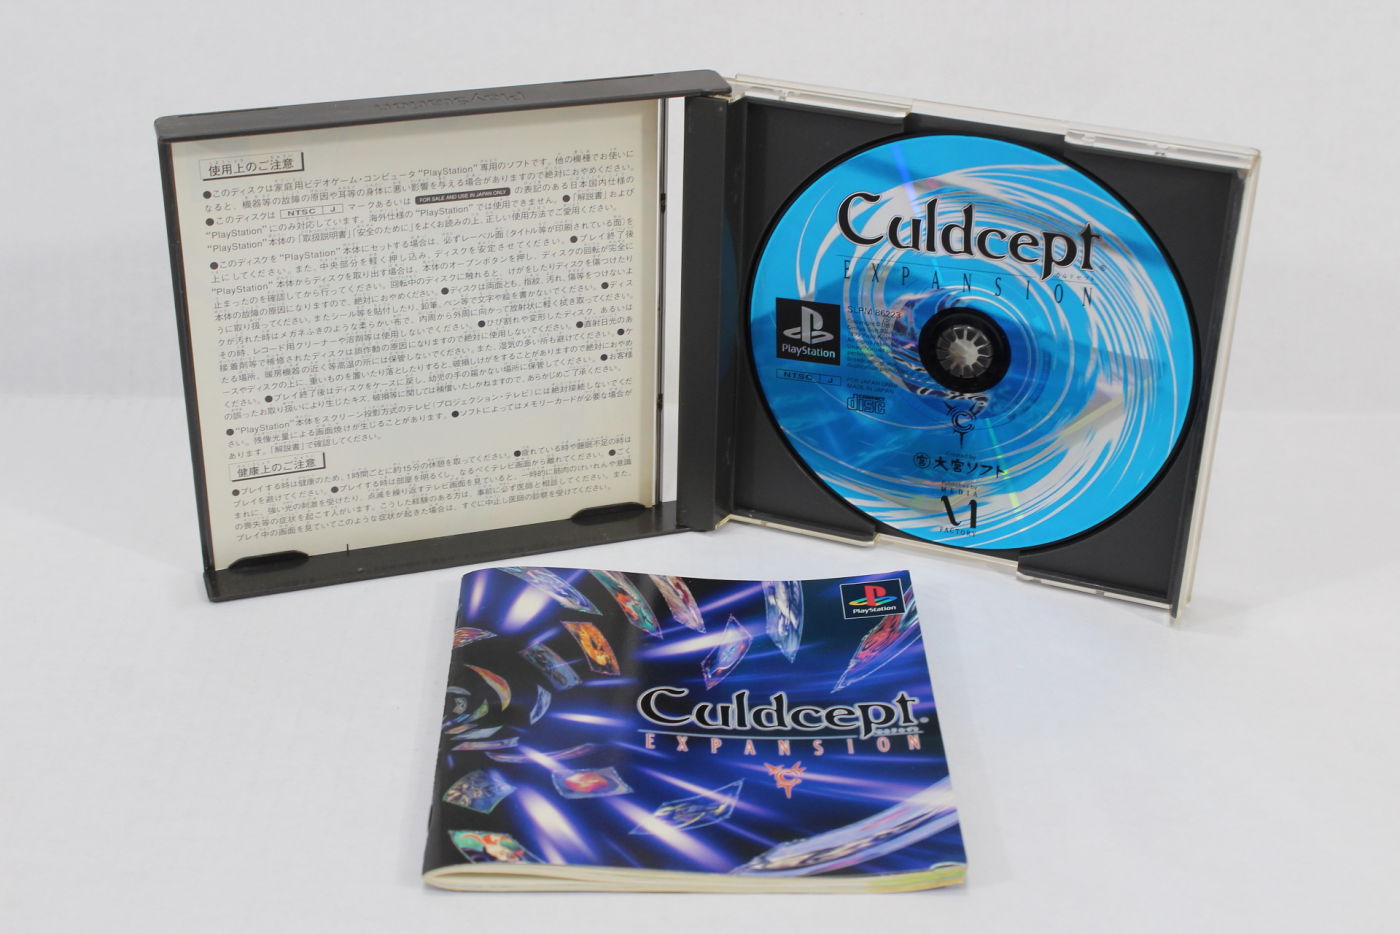 Lot of 2 Culdcept Expansion & Cepter’s Guild Vol.1 (B) PS1 – Retro ...